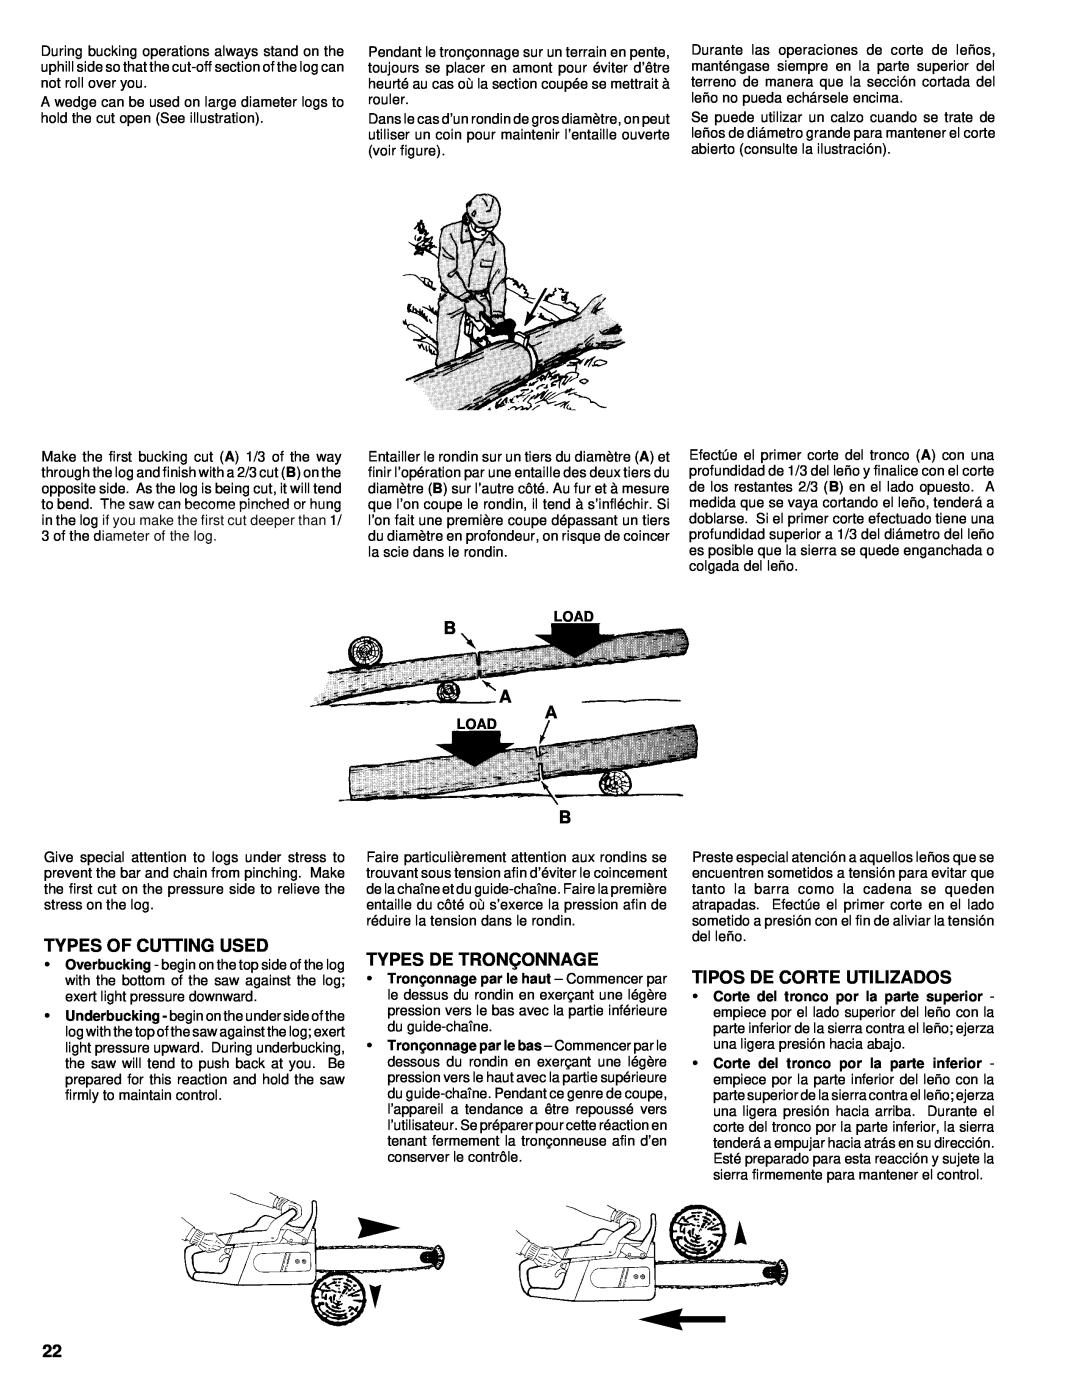 Homelite UT74020 manual B A A, Types Of Cutting Used, Types De Tronçonnage, Tipos De Corte Utilizados, Load 